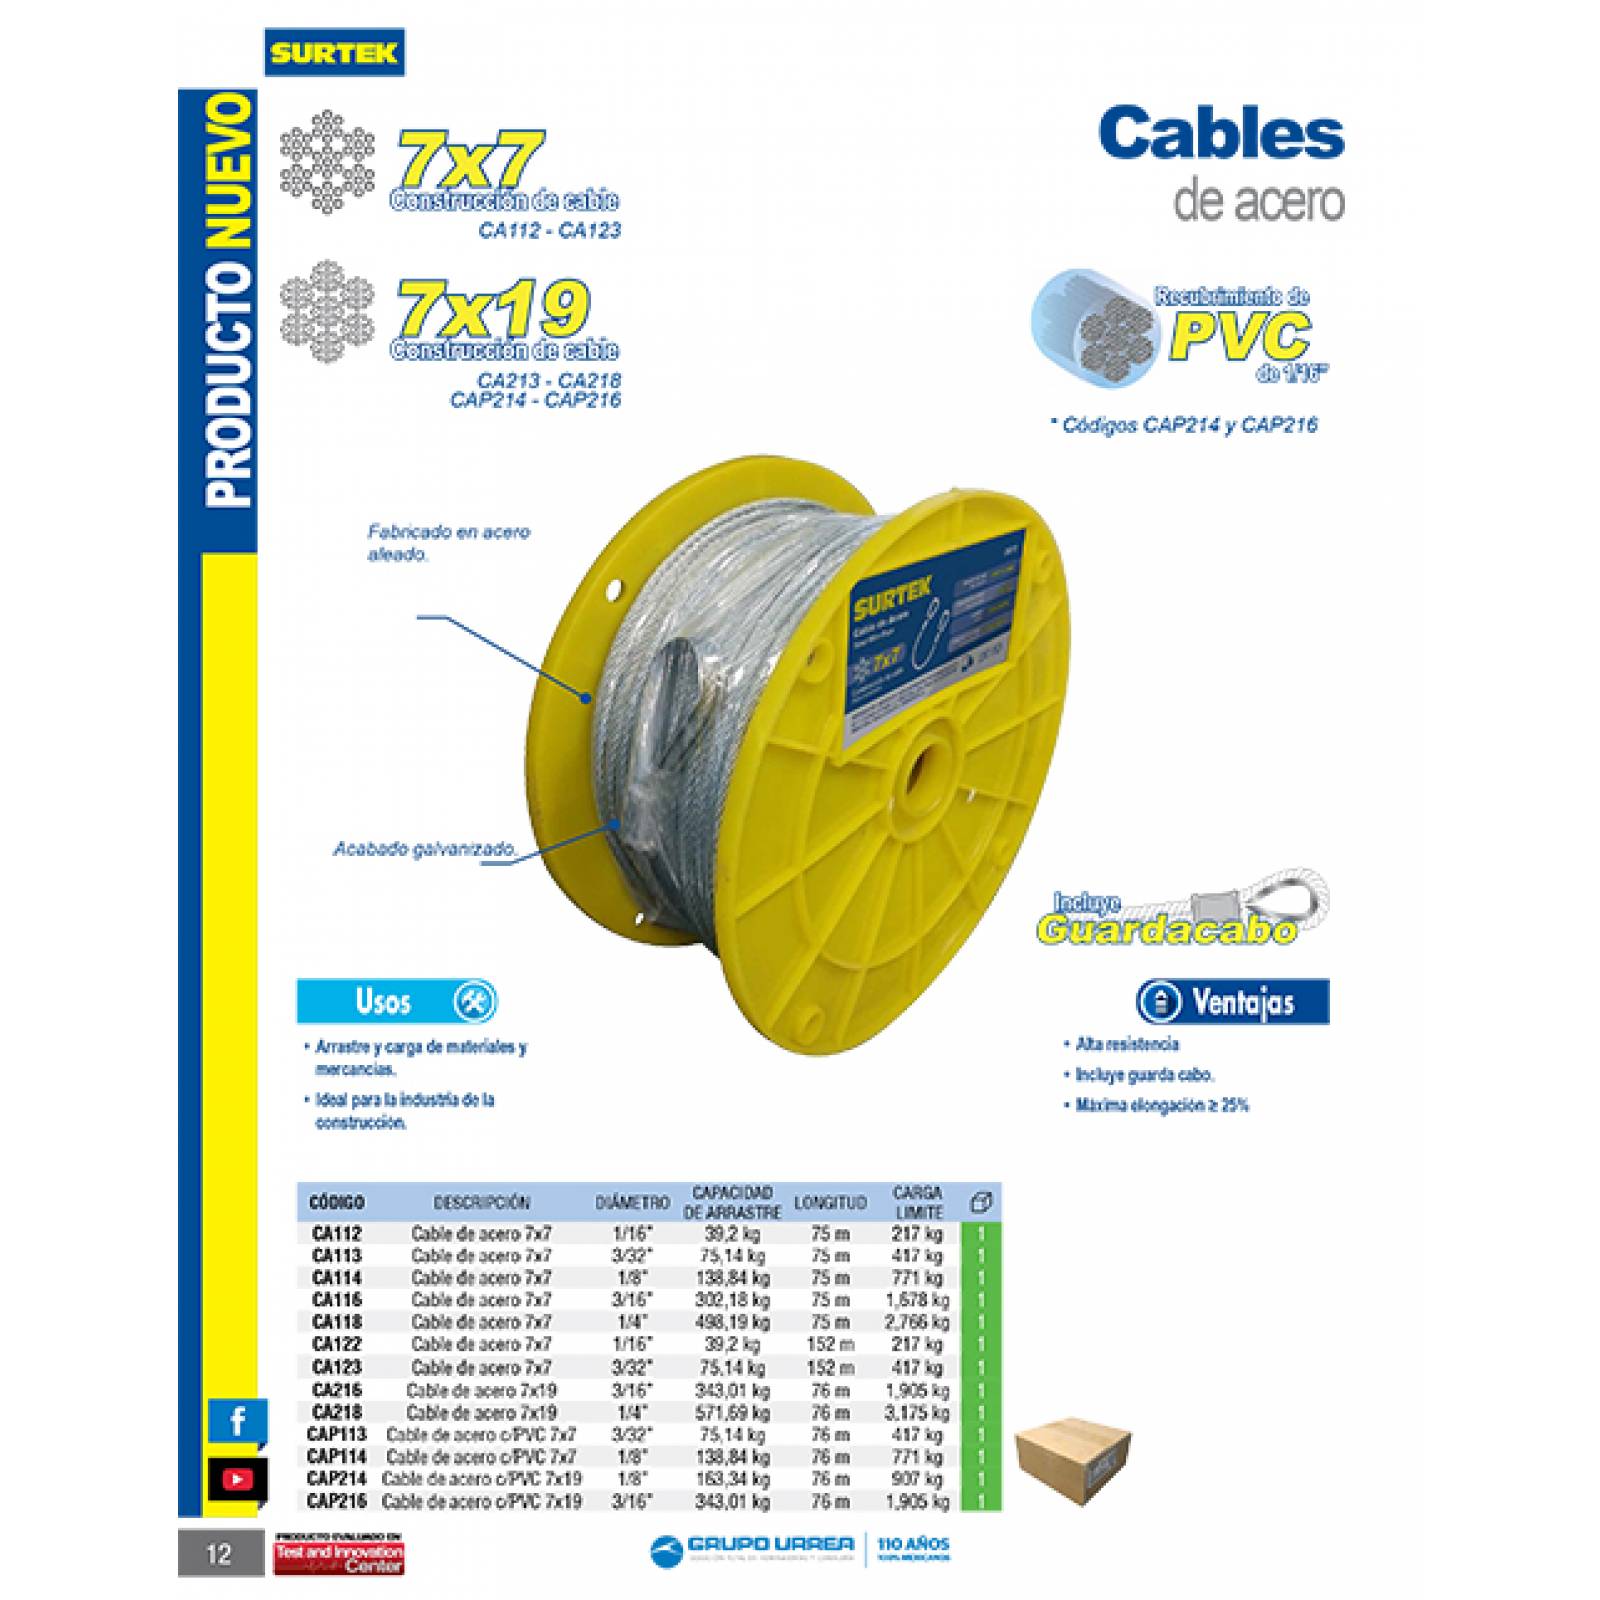 Cable Acero 7x7 3/16 X75m Ca116 Surtek 